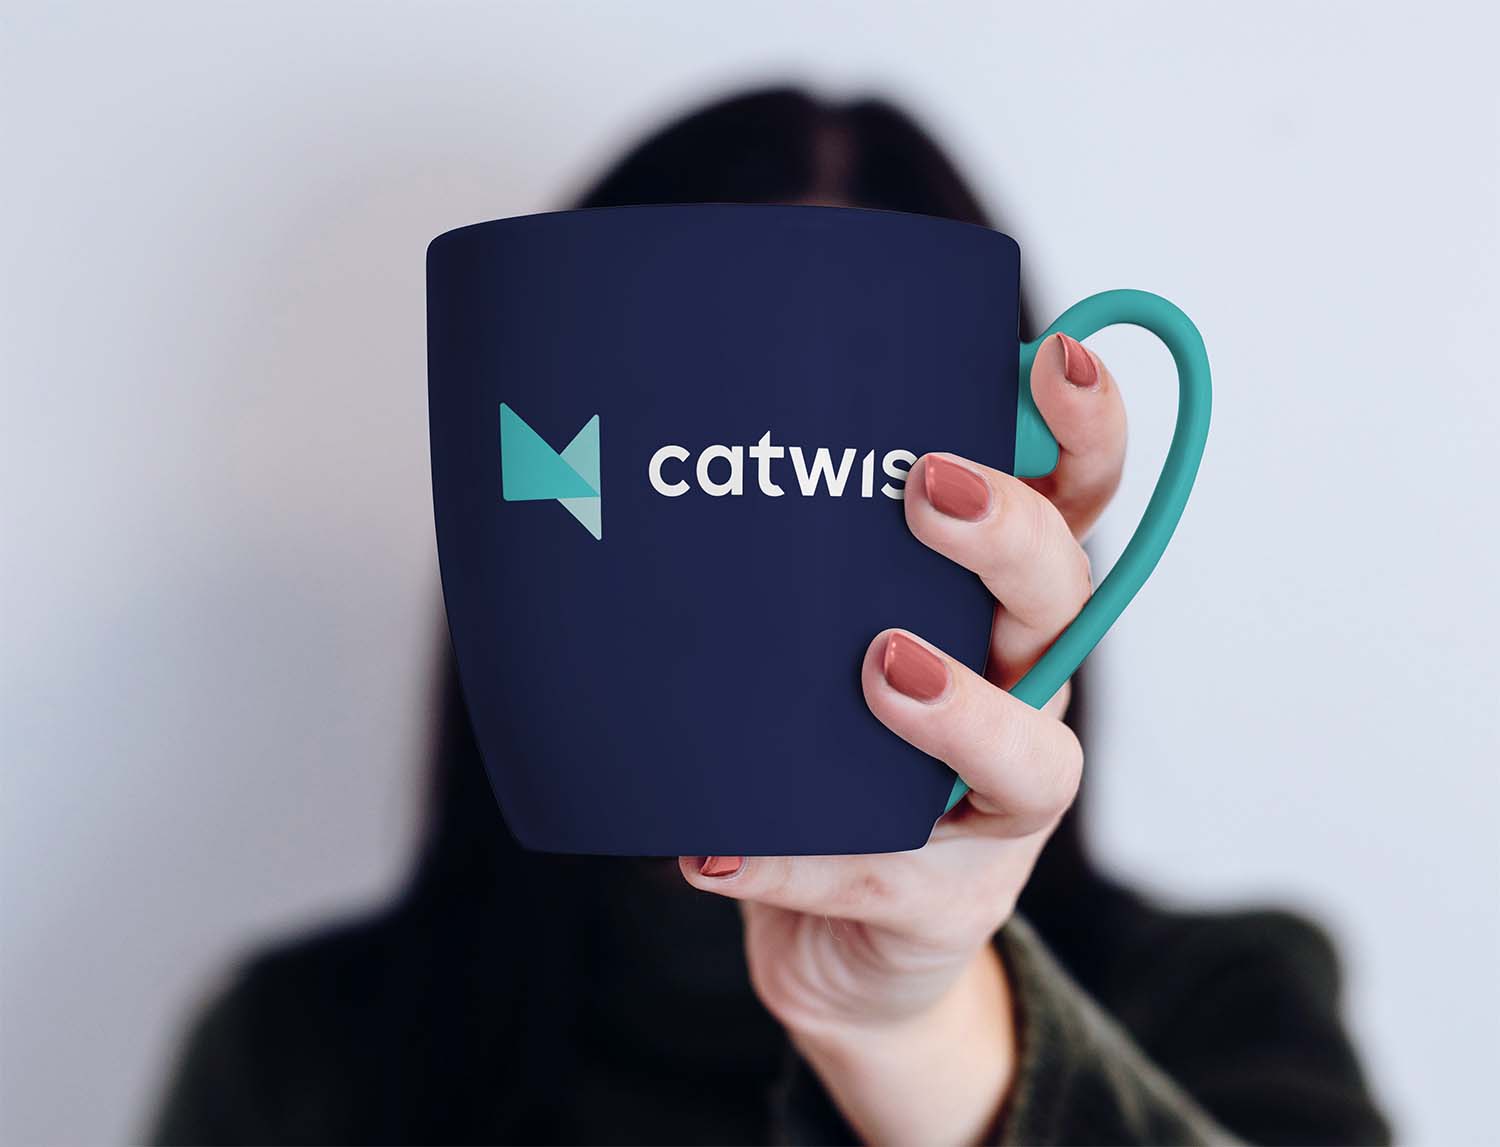 Catwise ontwerp koffie mok sterk reclamebureau